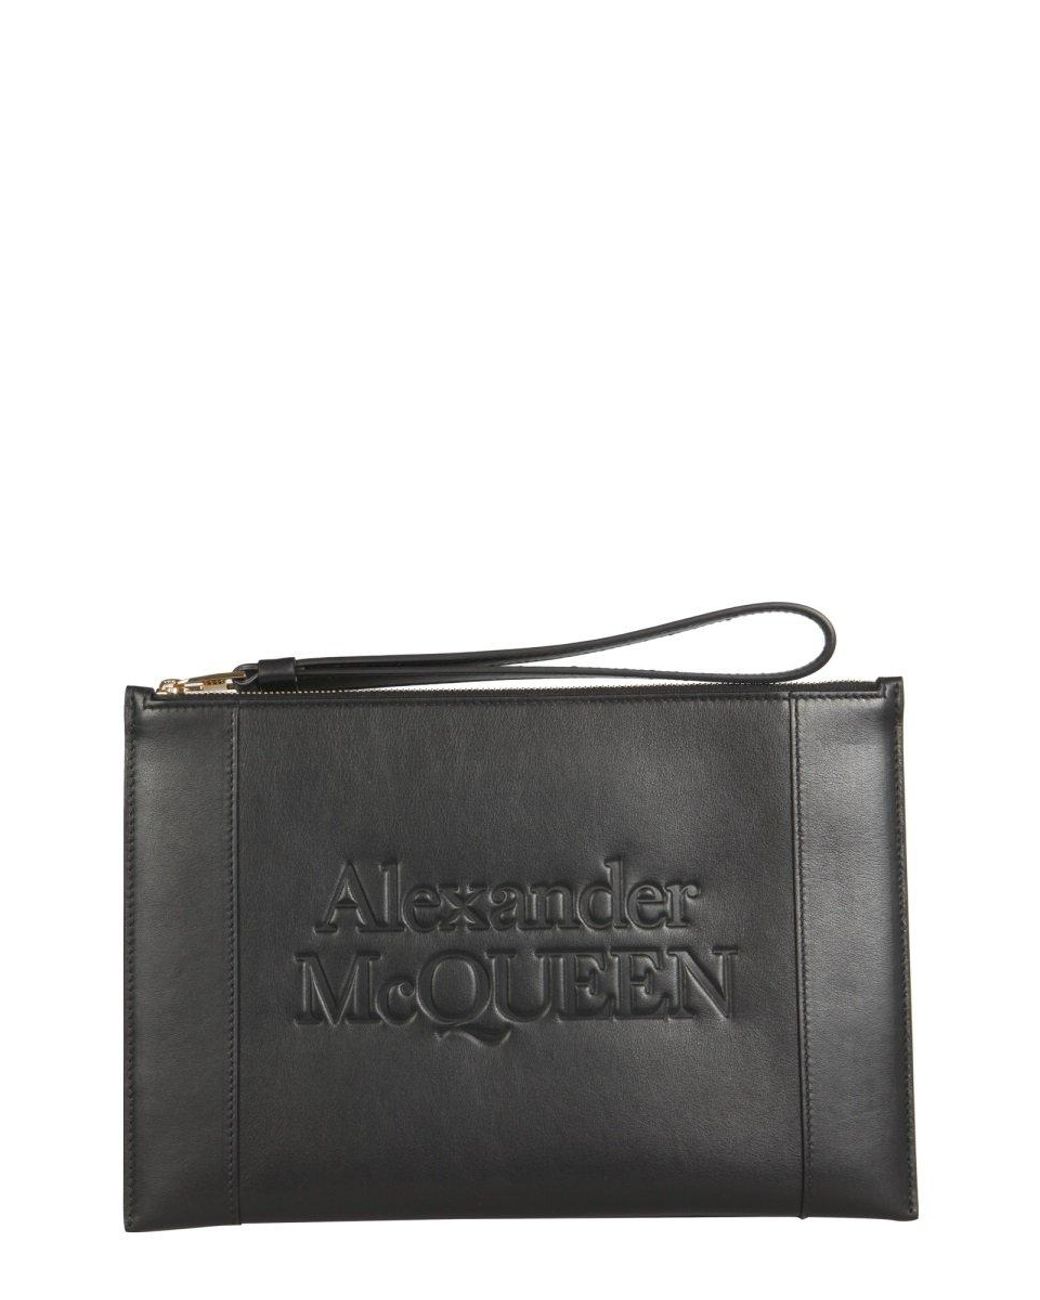 Alexander McQueen Leather Signature Clutch in Black - Lyst